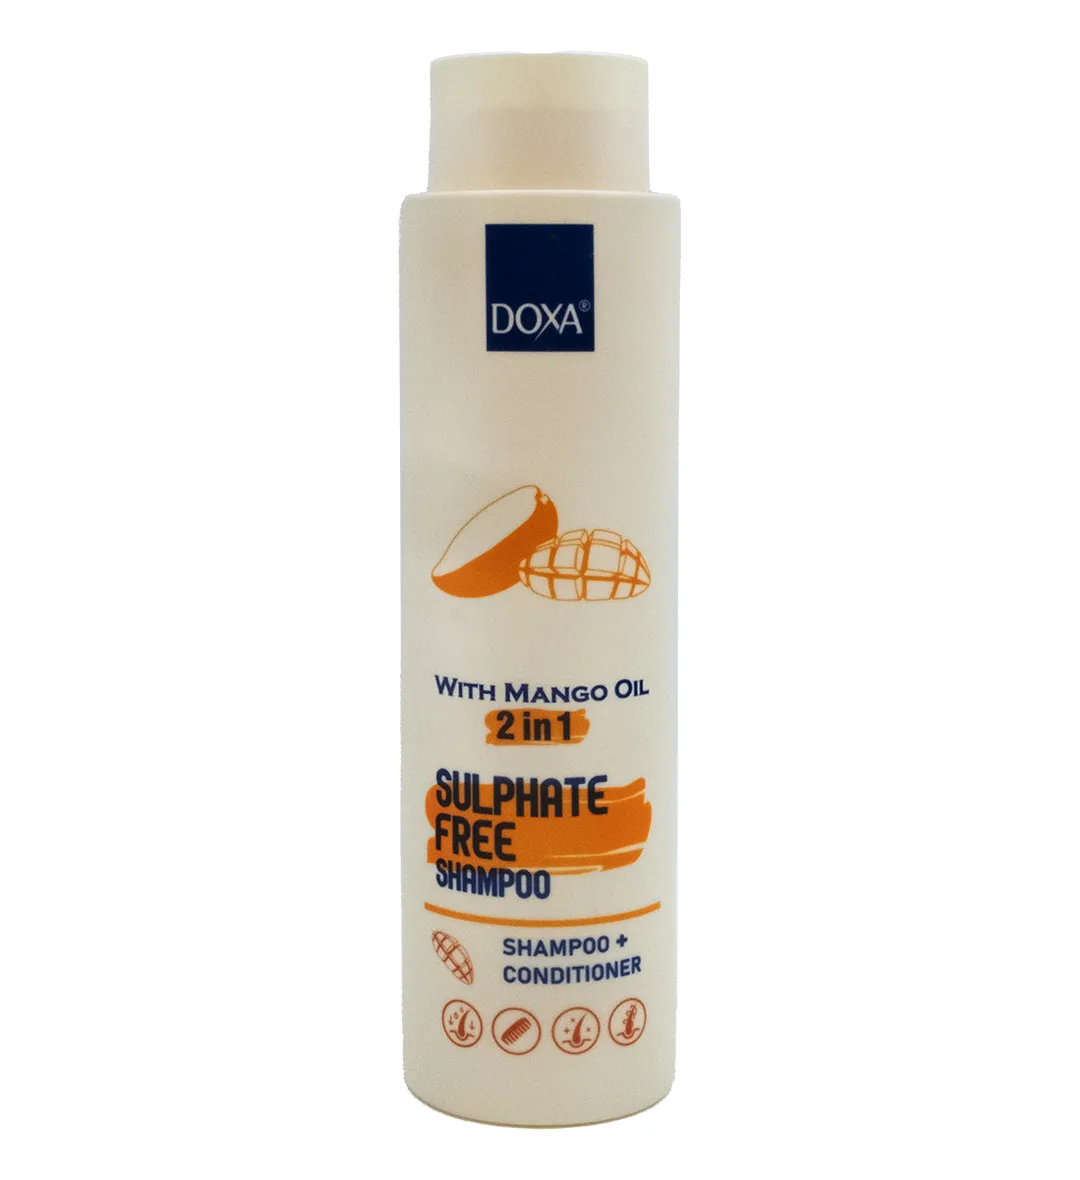 Doxa 460 Ml Sulphate-Free Shampoo Canditioner+Shampoo Mango